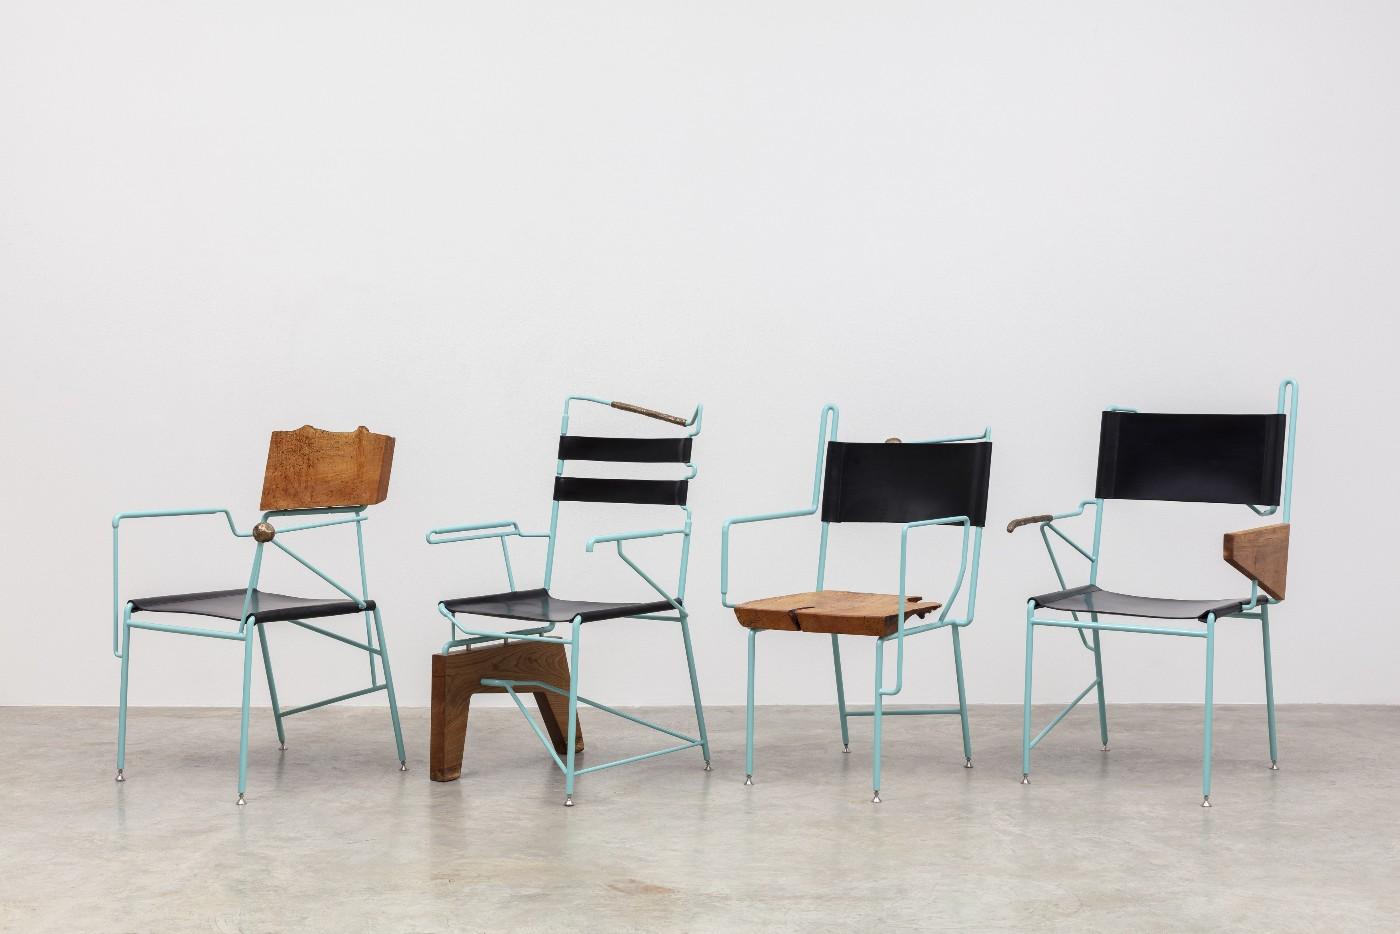 Jonathan Trayte [British, b. 1980], "Dining chairs."